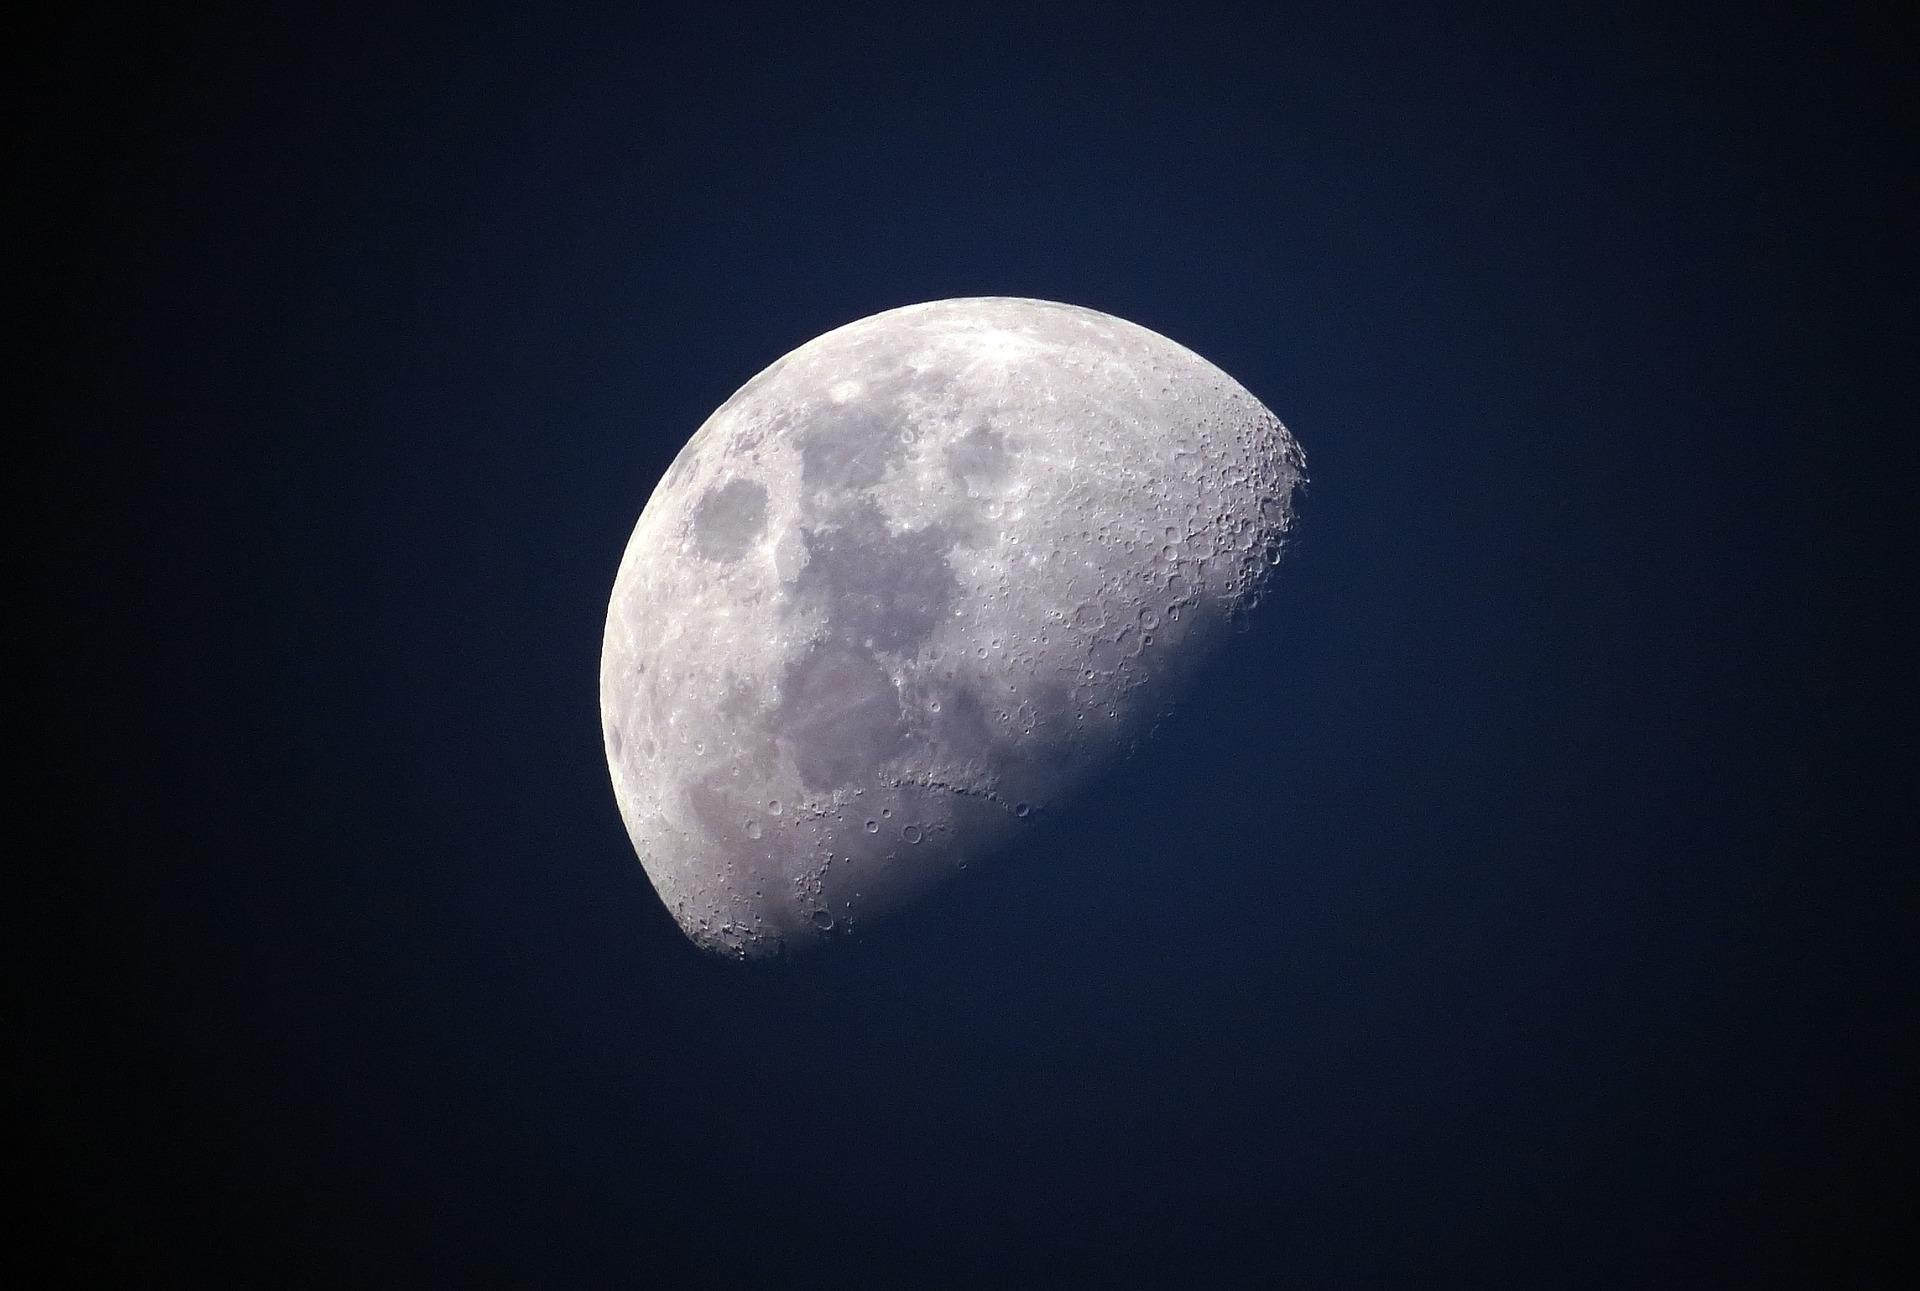 Mond fotografieren - mittels Teleobjektiv, "holt" man den Mond ganz nah heran